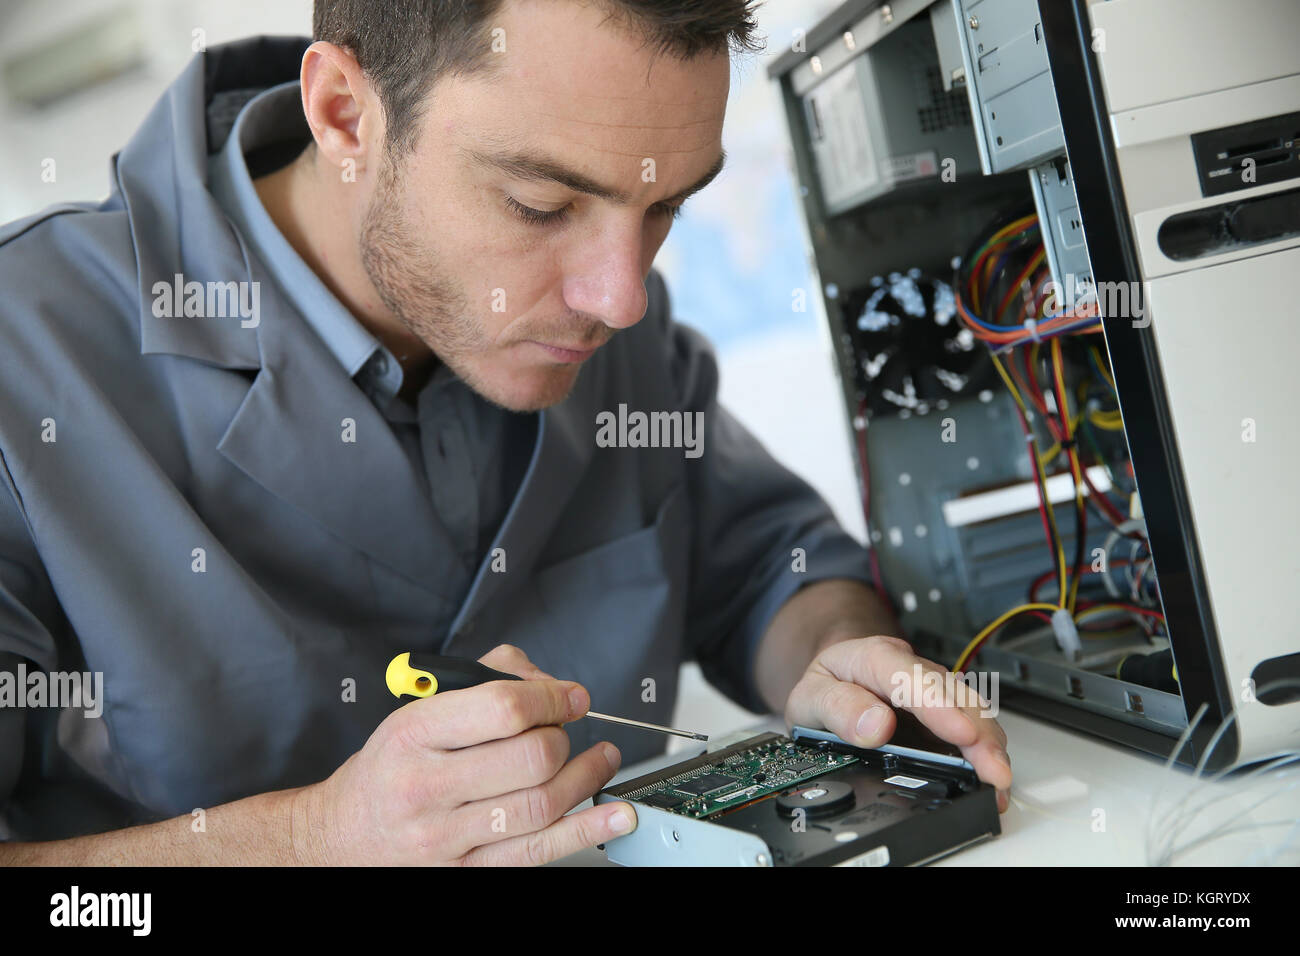 Technician fixing computer hardware Stock Photo